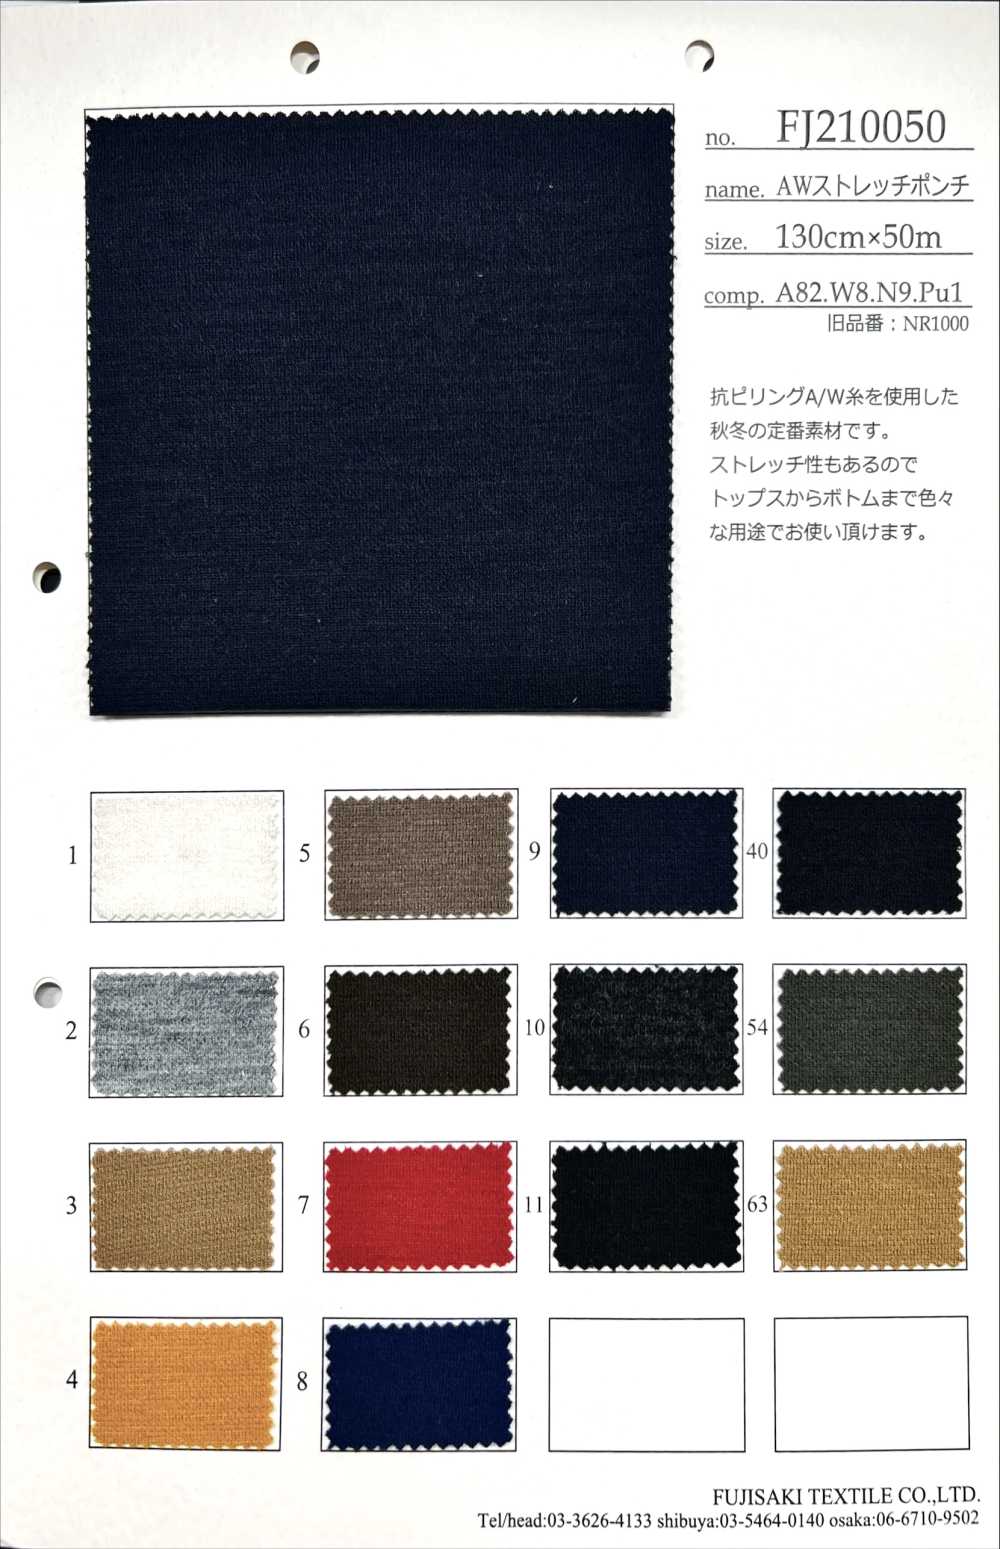 FJ210050 Pont Extensible AW[Fabrication De Textile] Fujisaki Textile